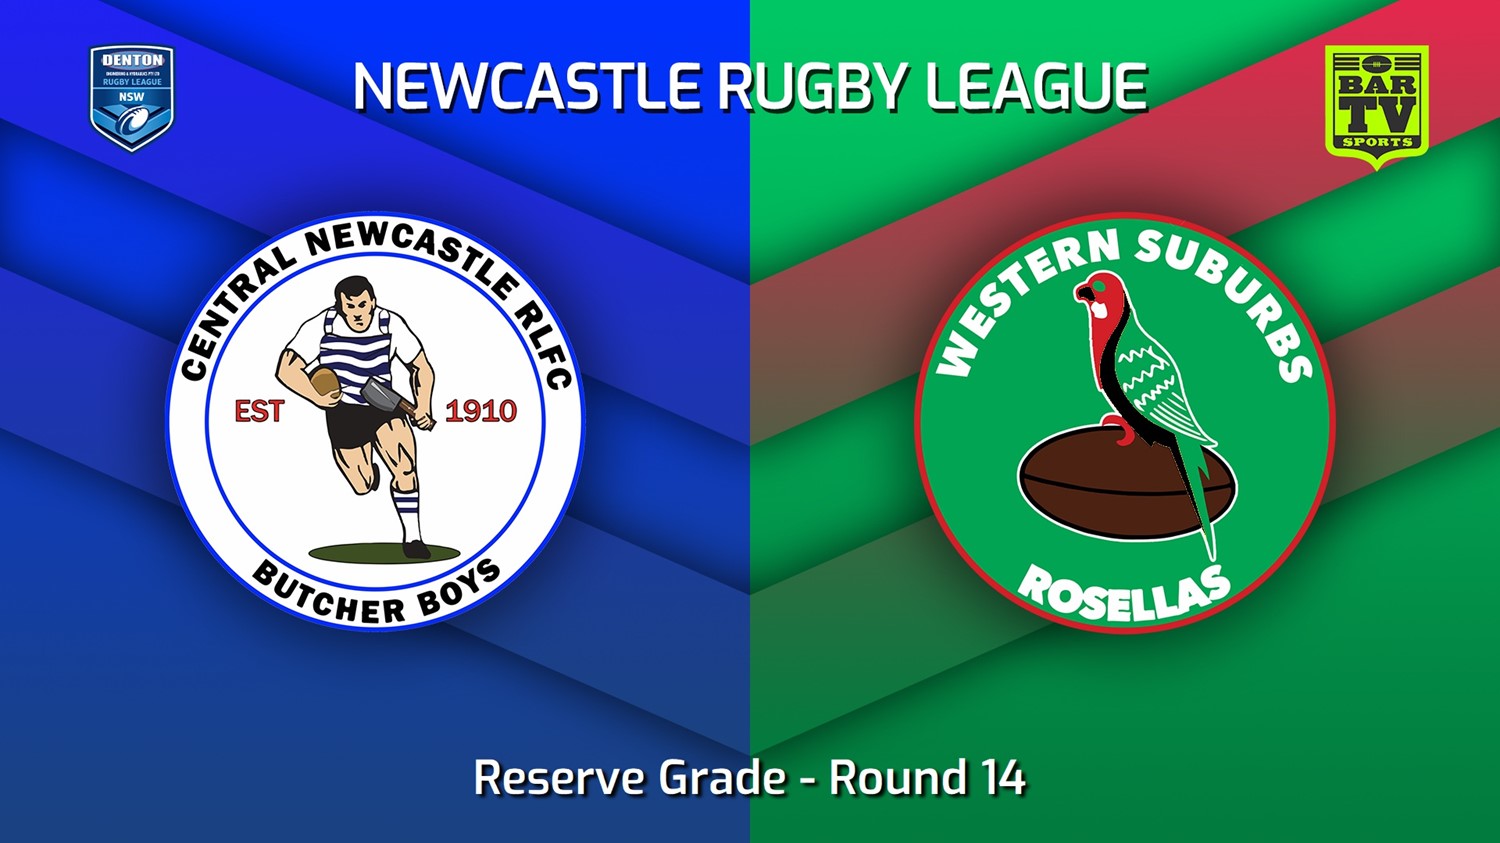 230702-Newcastle RL Round 14 - Reserve Grade - Central Newcastle Butcher Boys v Western Suburbs Rosellas Slate Image